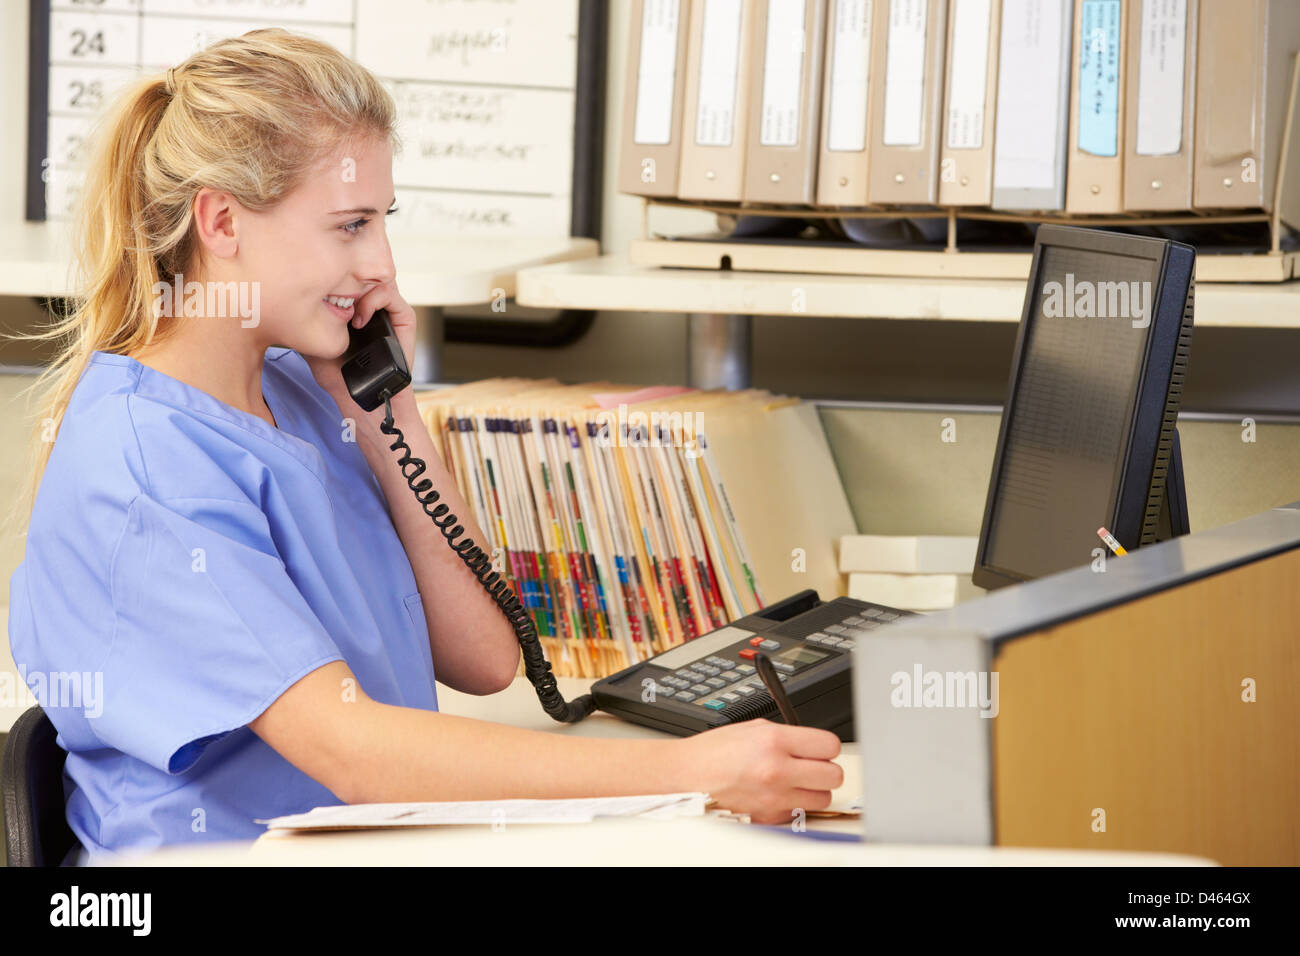 Nurse Making Phone Call At Nurses Station Stock Photo